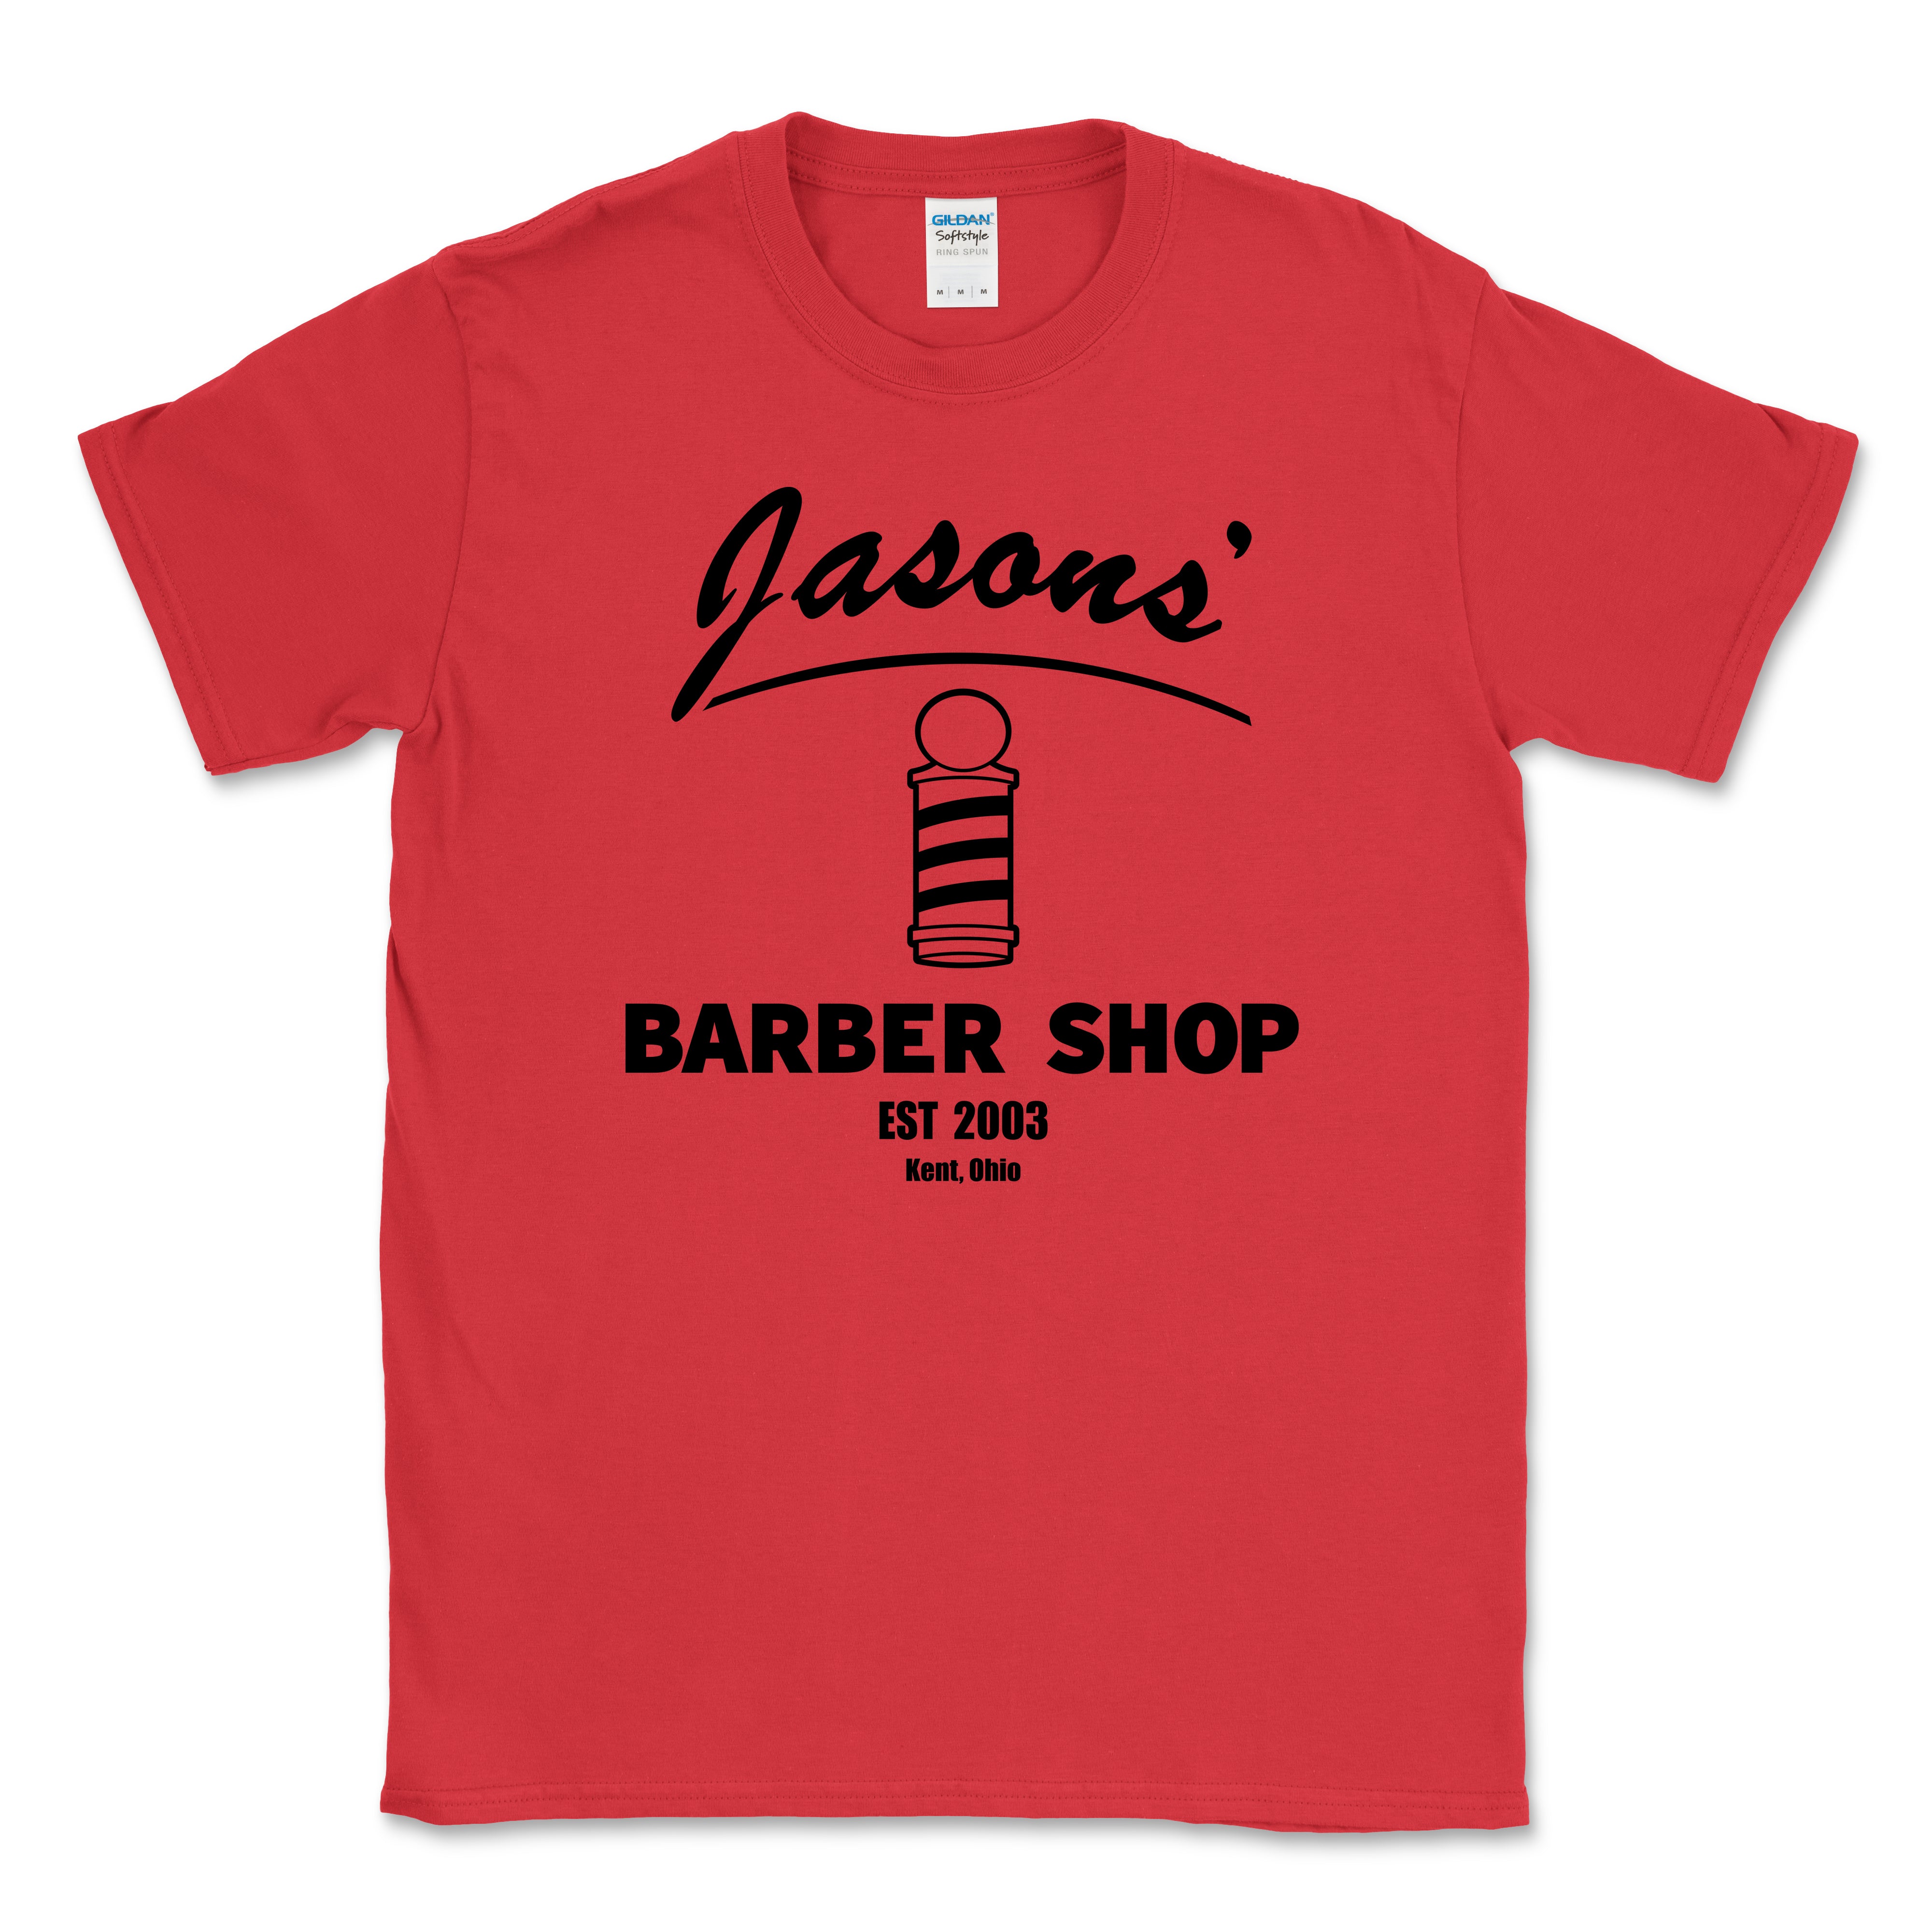 Jasons Barbershop